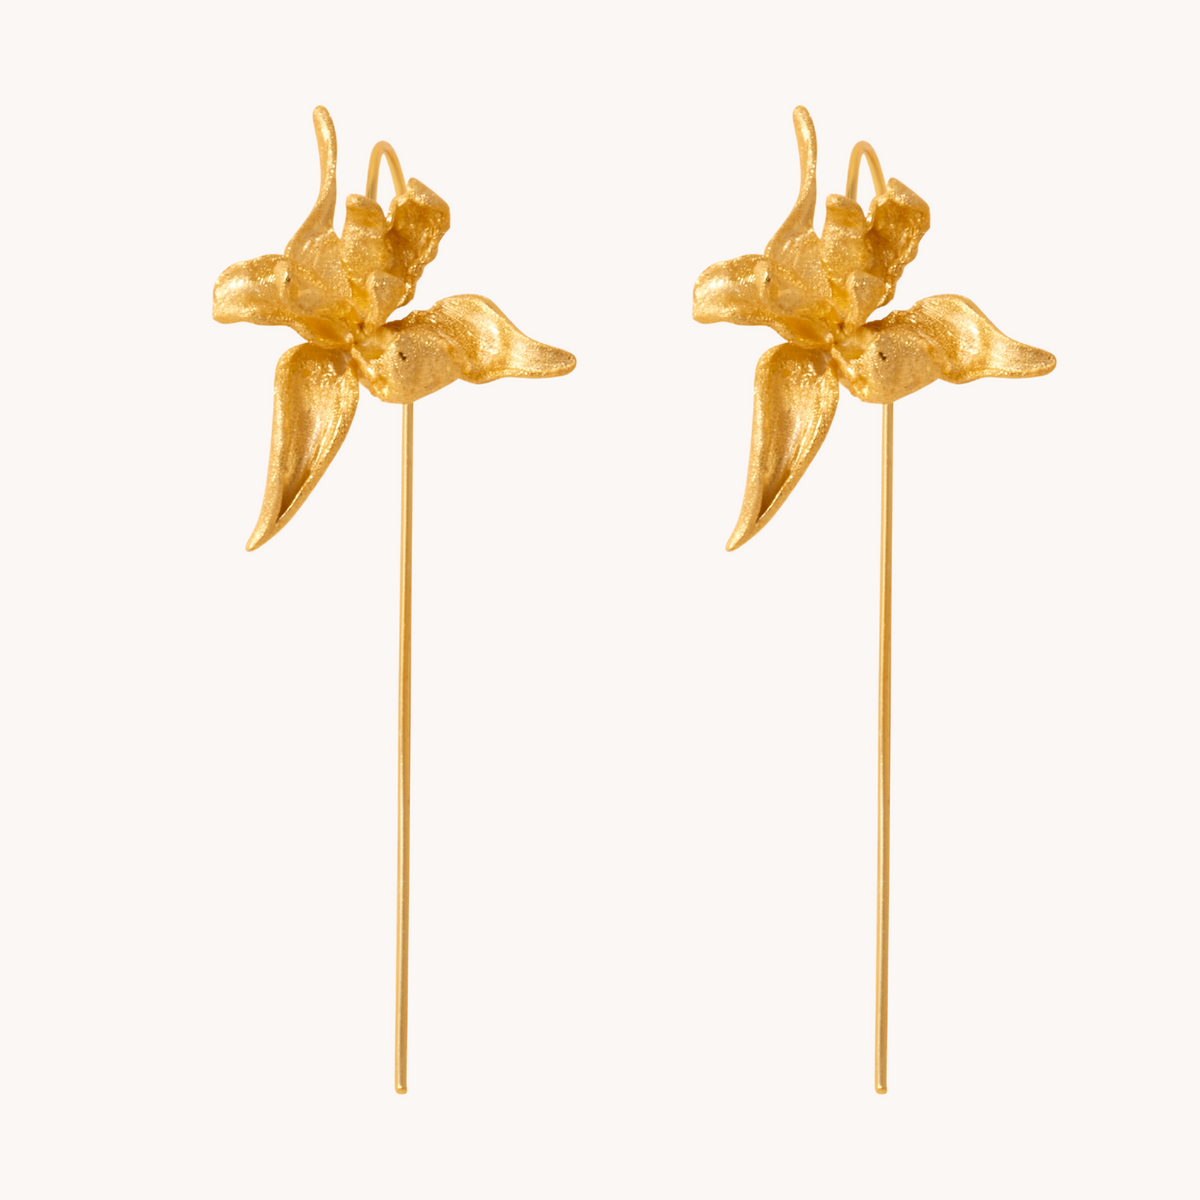 Iris Gold Drop Earrings